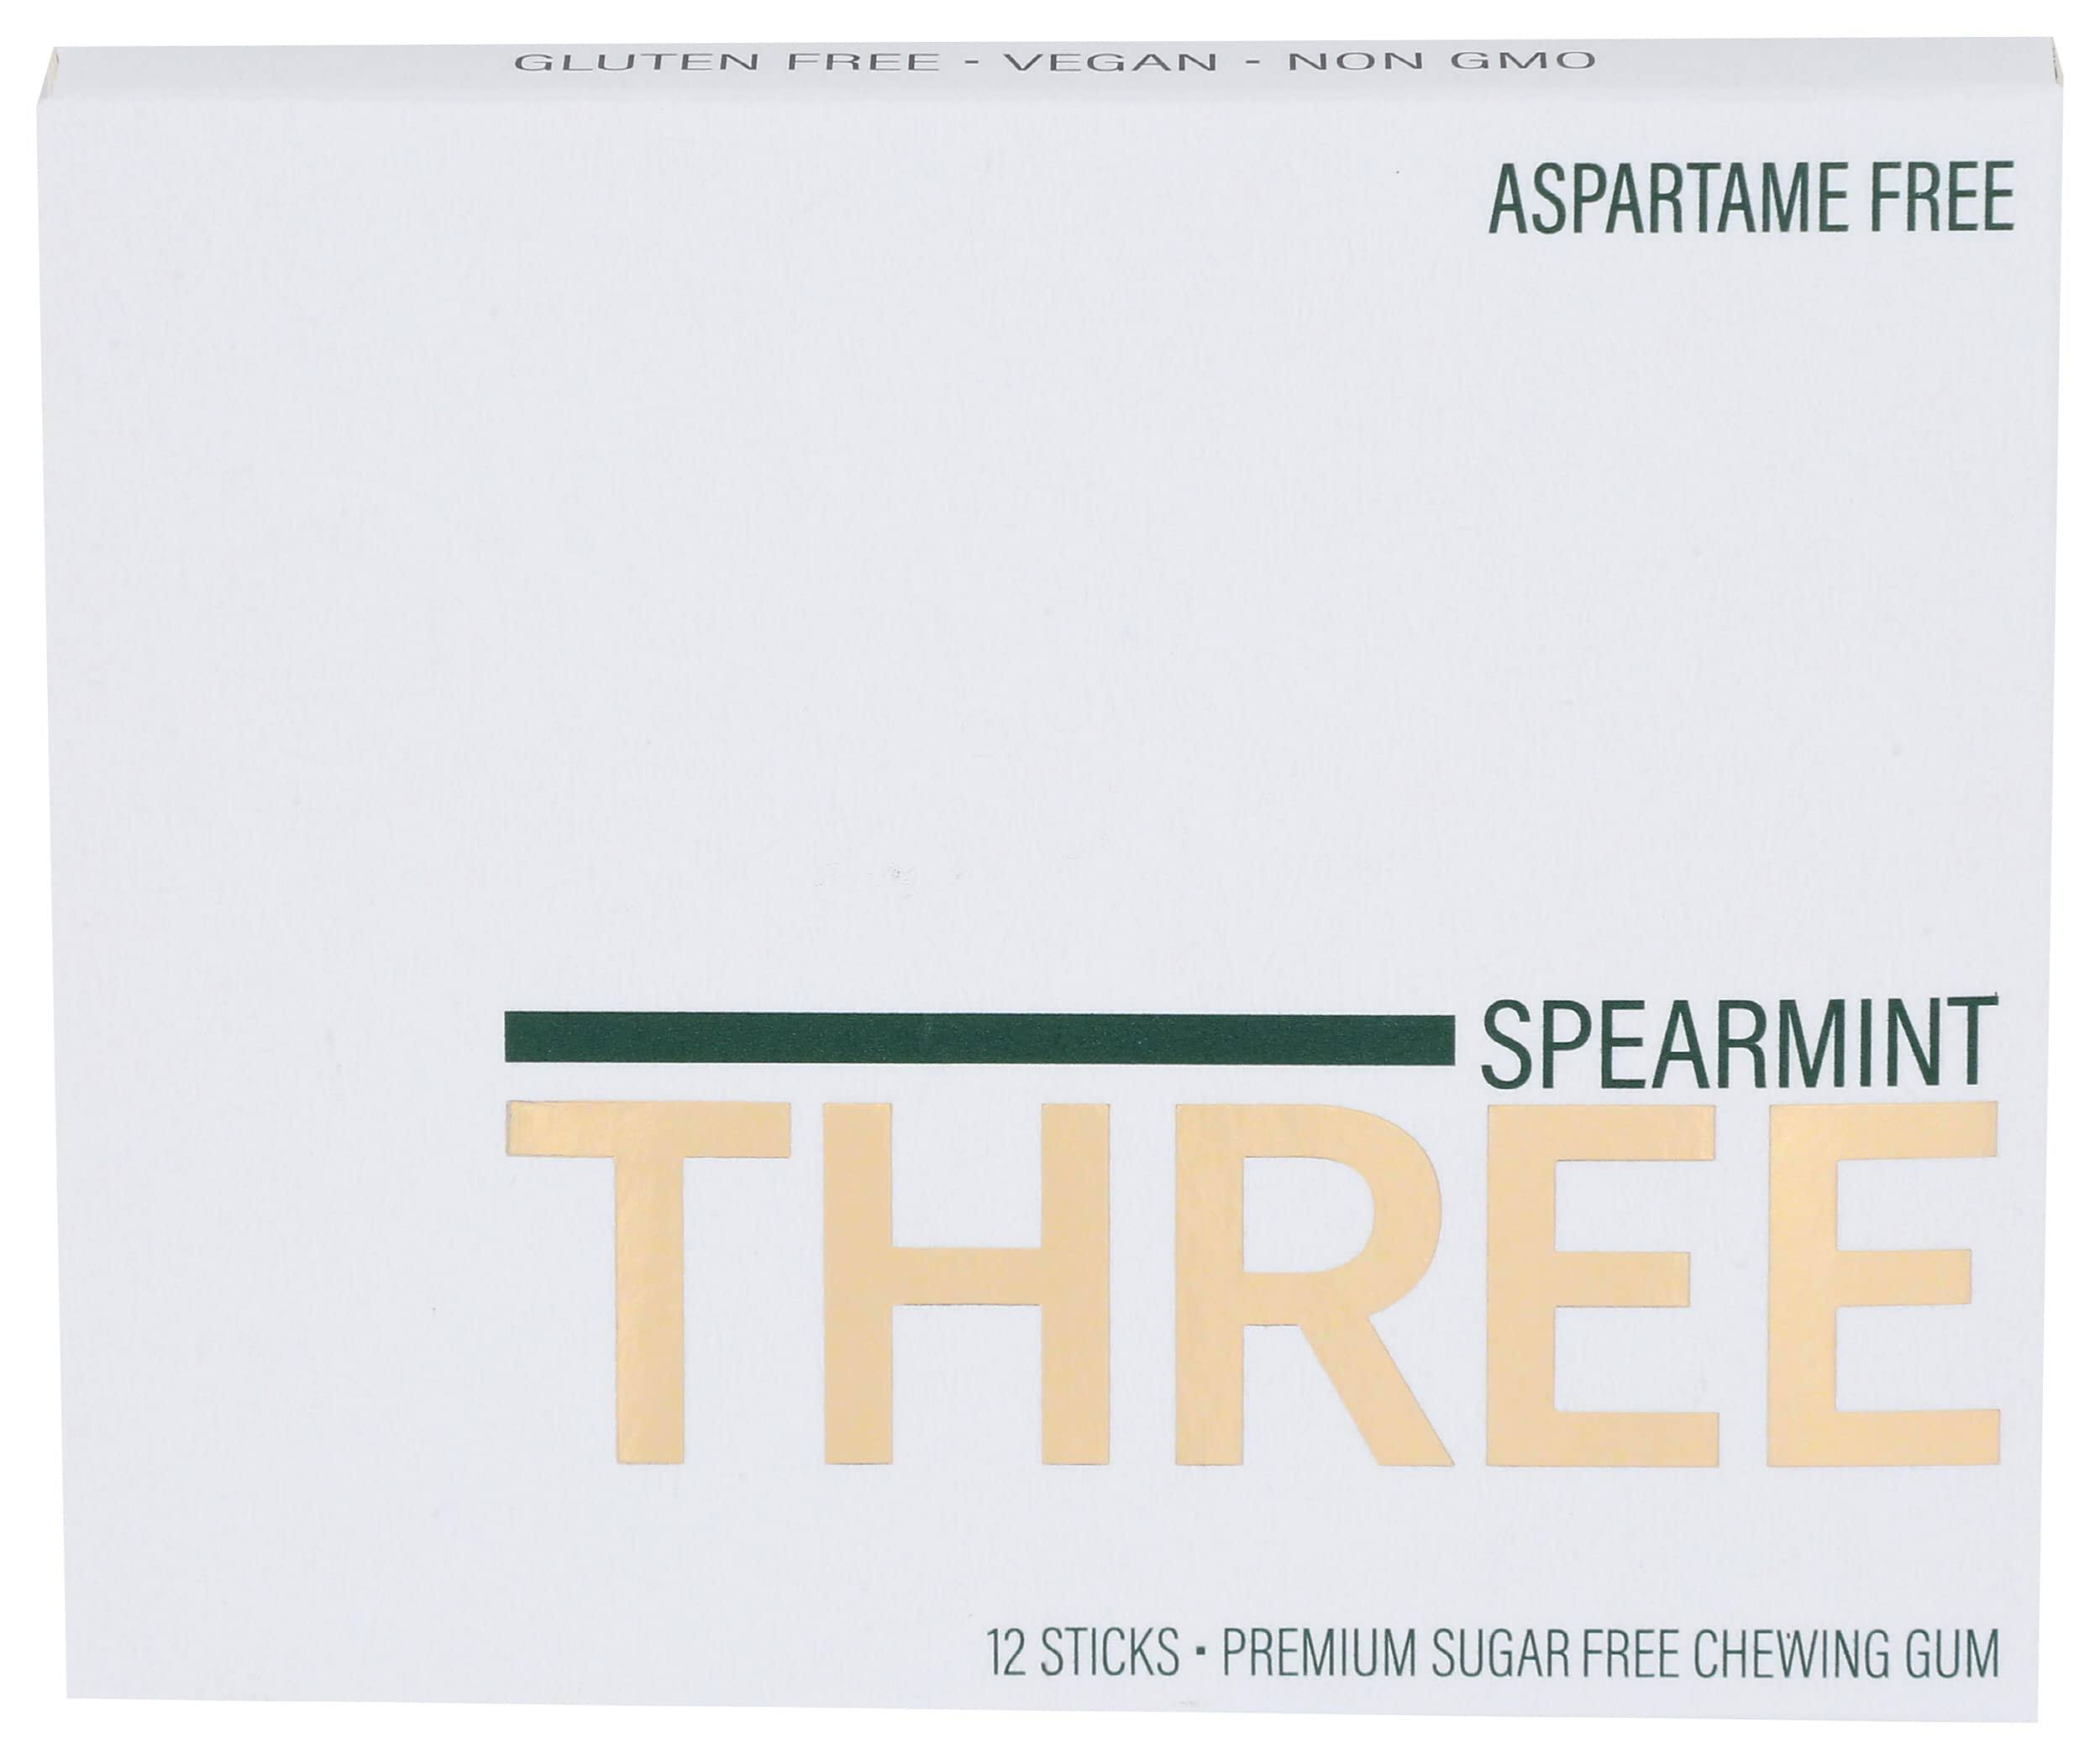 The Pur Company Spearmint Three Sugar Free Gum 12 Sticks